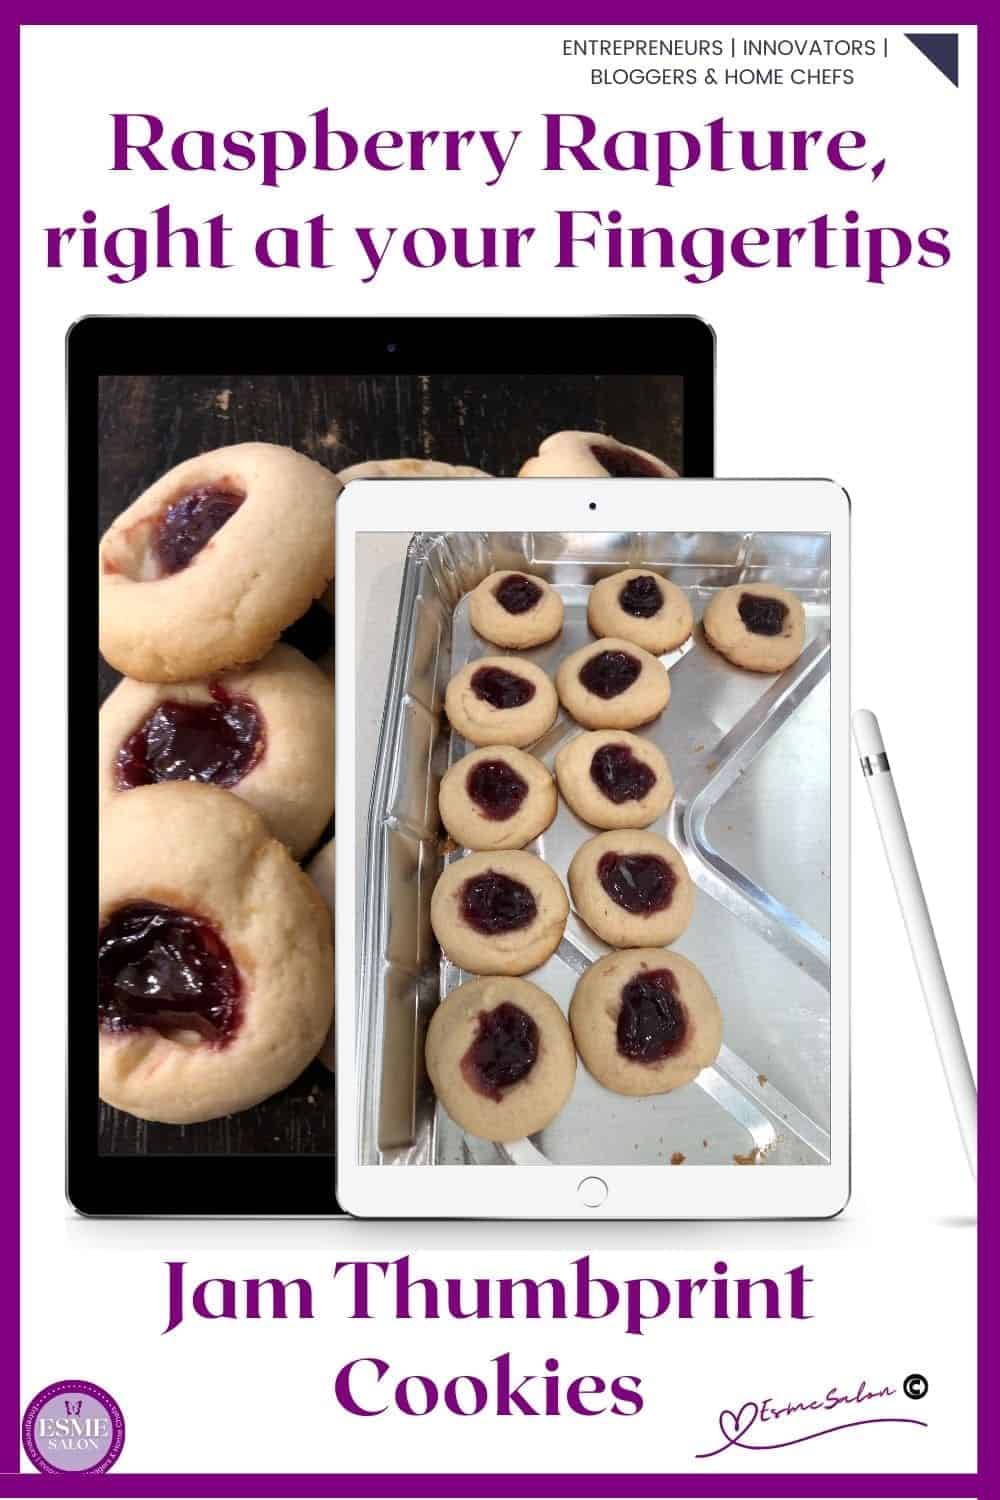 an image of Raspberry Jam Thumbprint Cookies